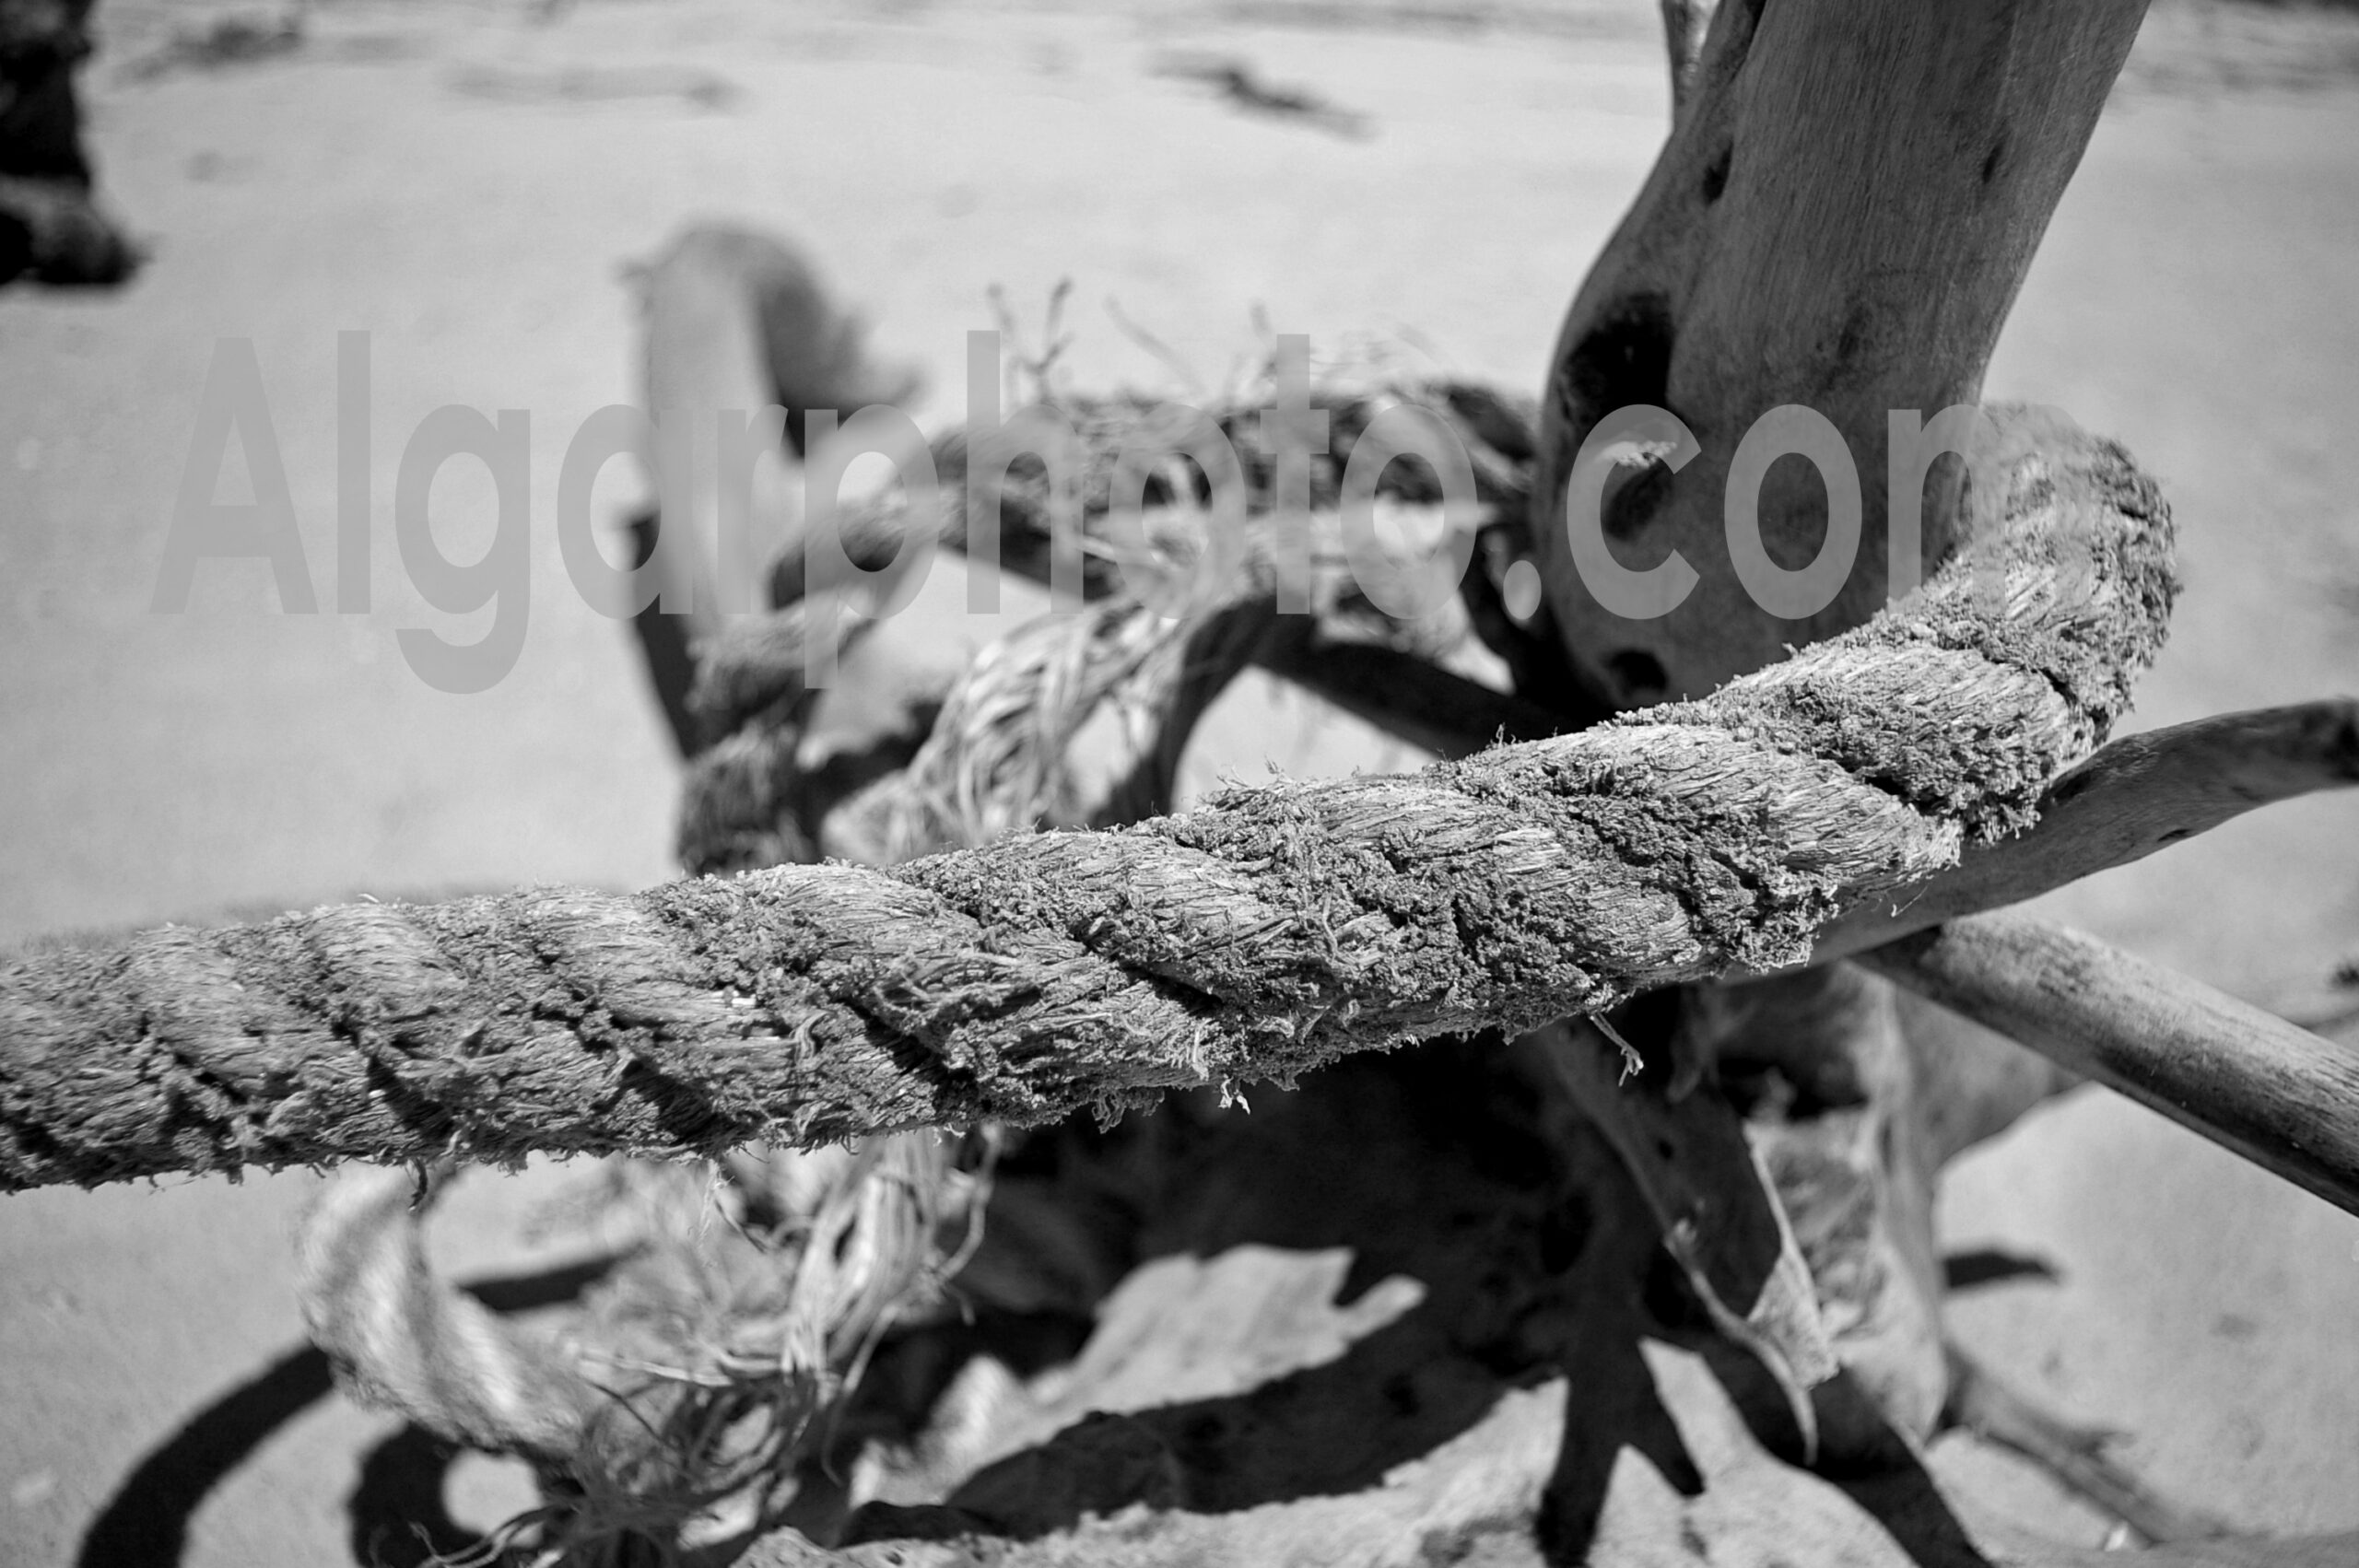 Praia da Amoreira Algarve photography mono images by algarphoto